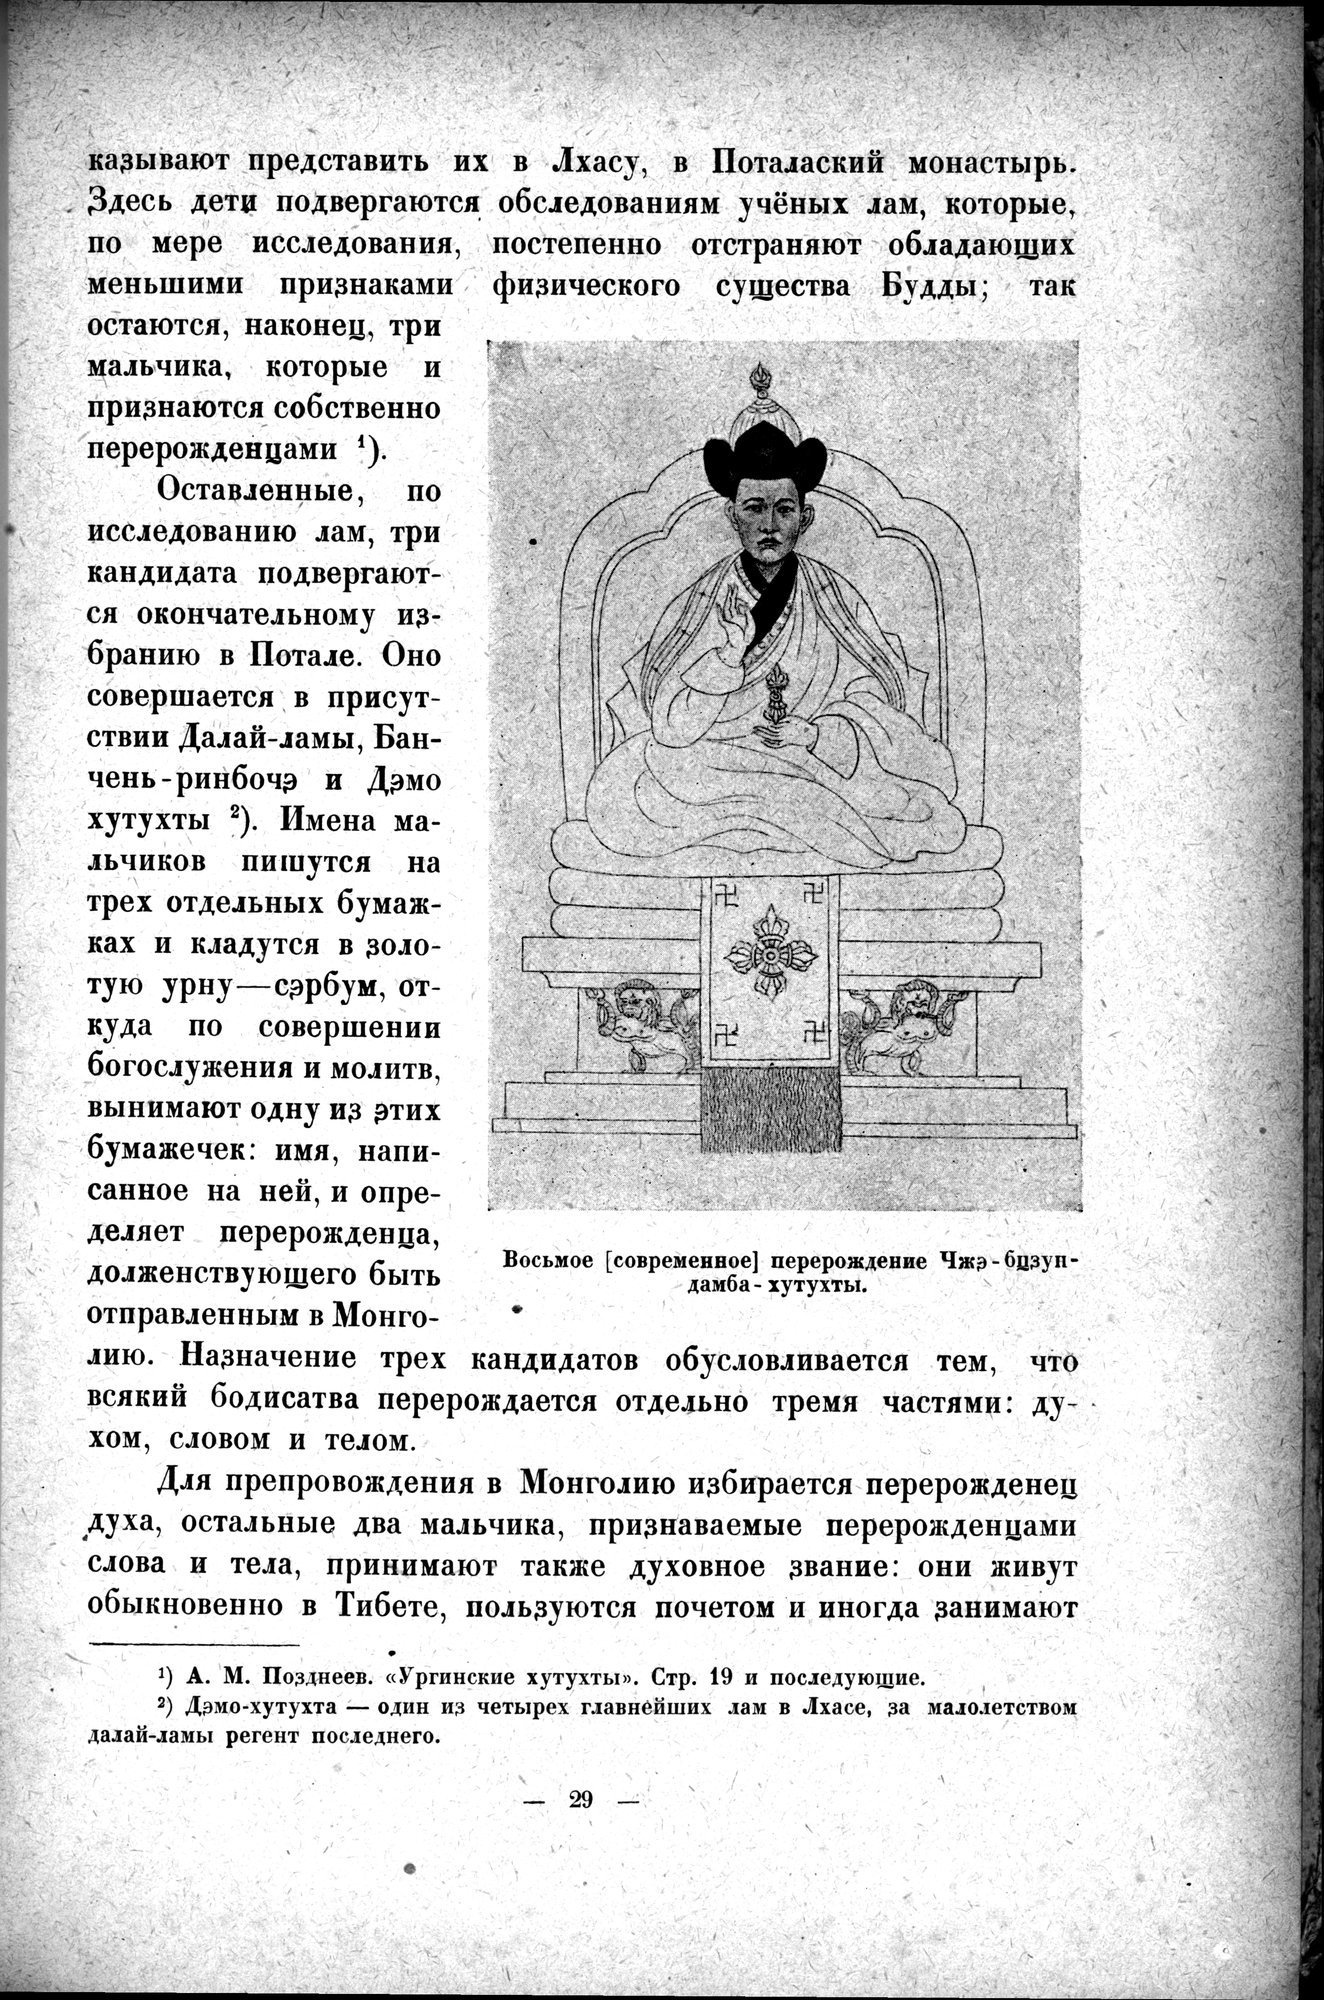 Mongoliya i Amdo i mertby gorod Khara-Khoto : vol.1 / Page 47 (Grayscale High Resolution Image)